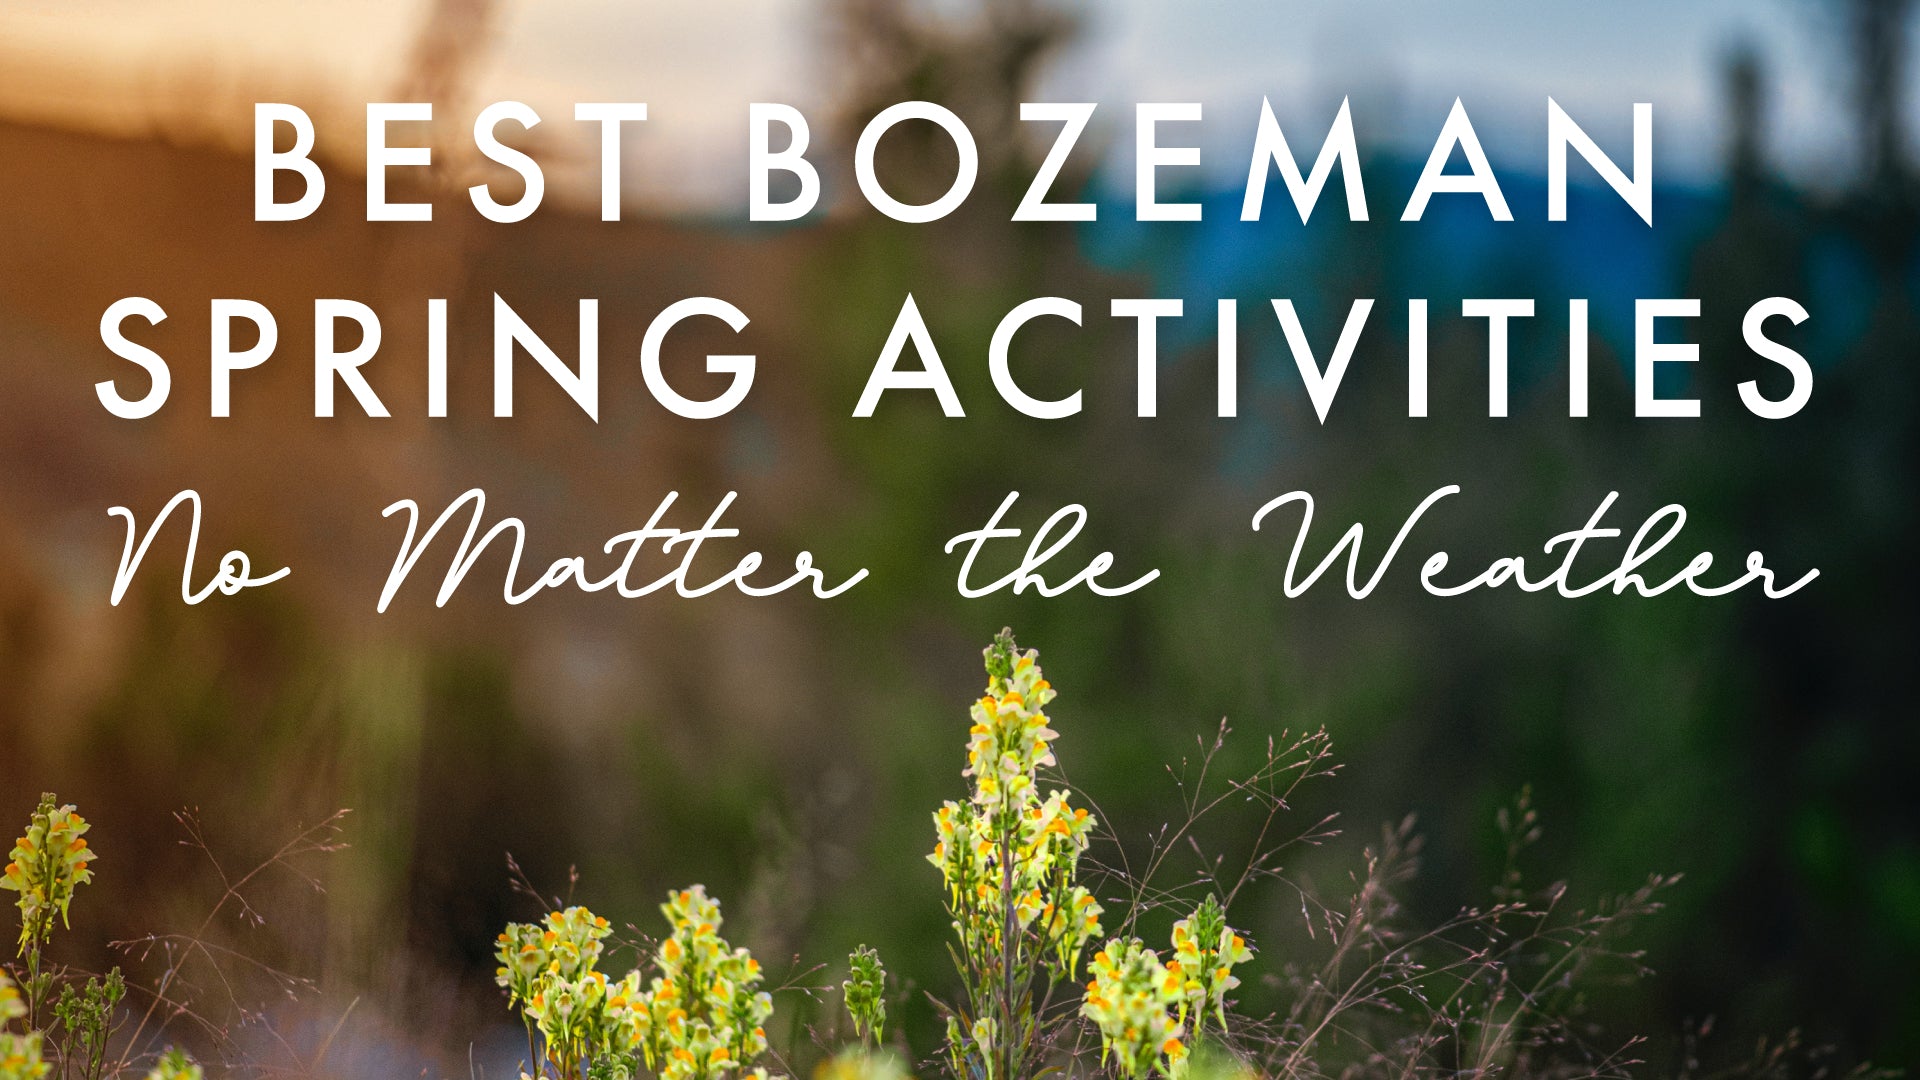 Best Bozeman Spring Activities No Matter the Weather!